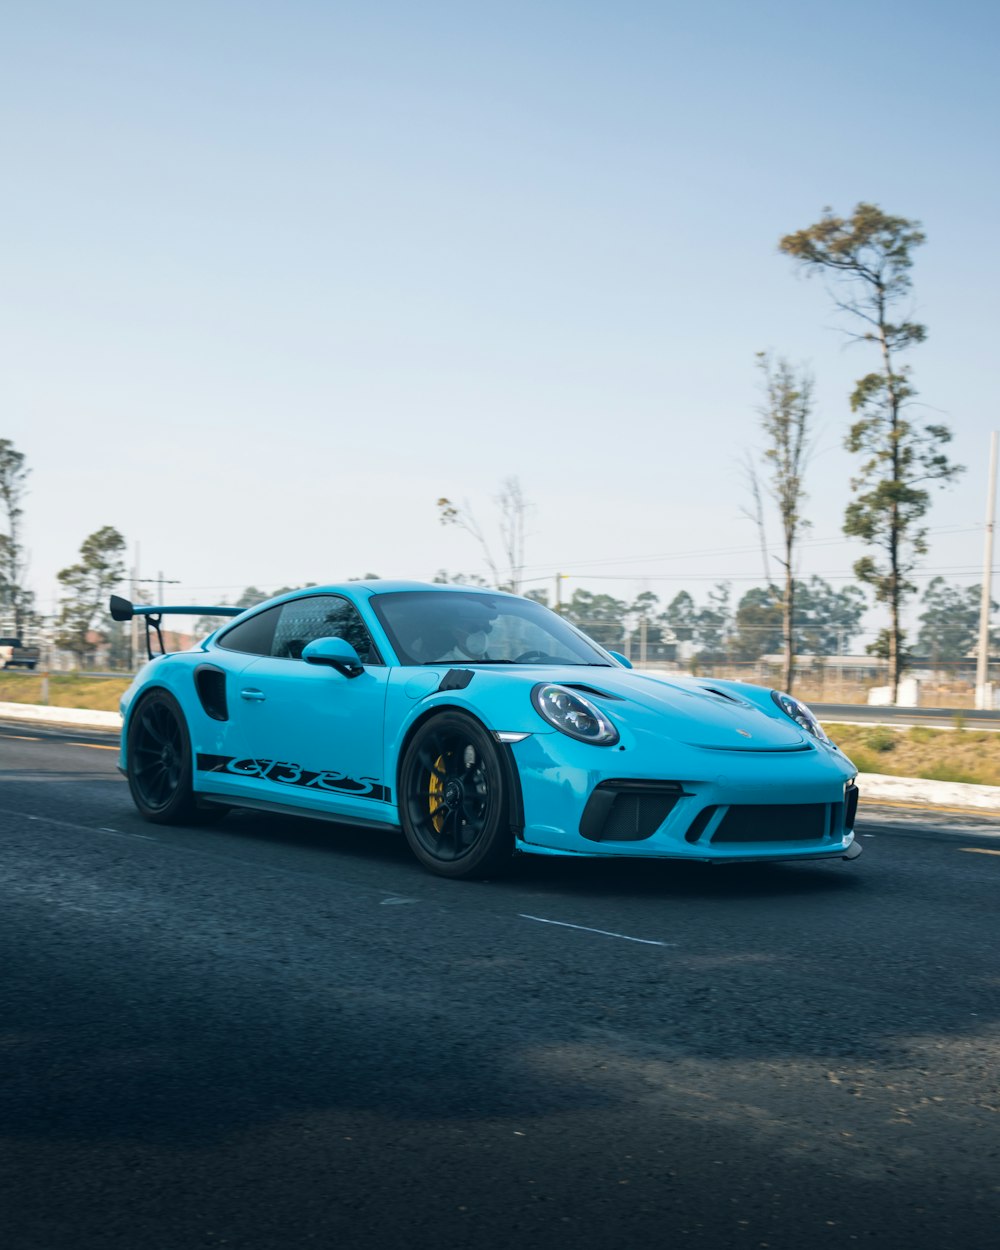 Porsche Gt3rs Pictures | Download Free Images on Unsplash